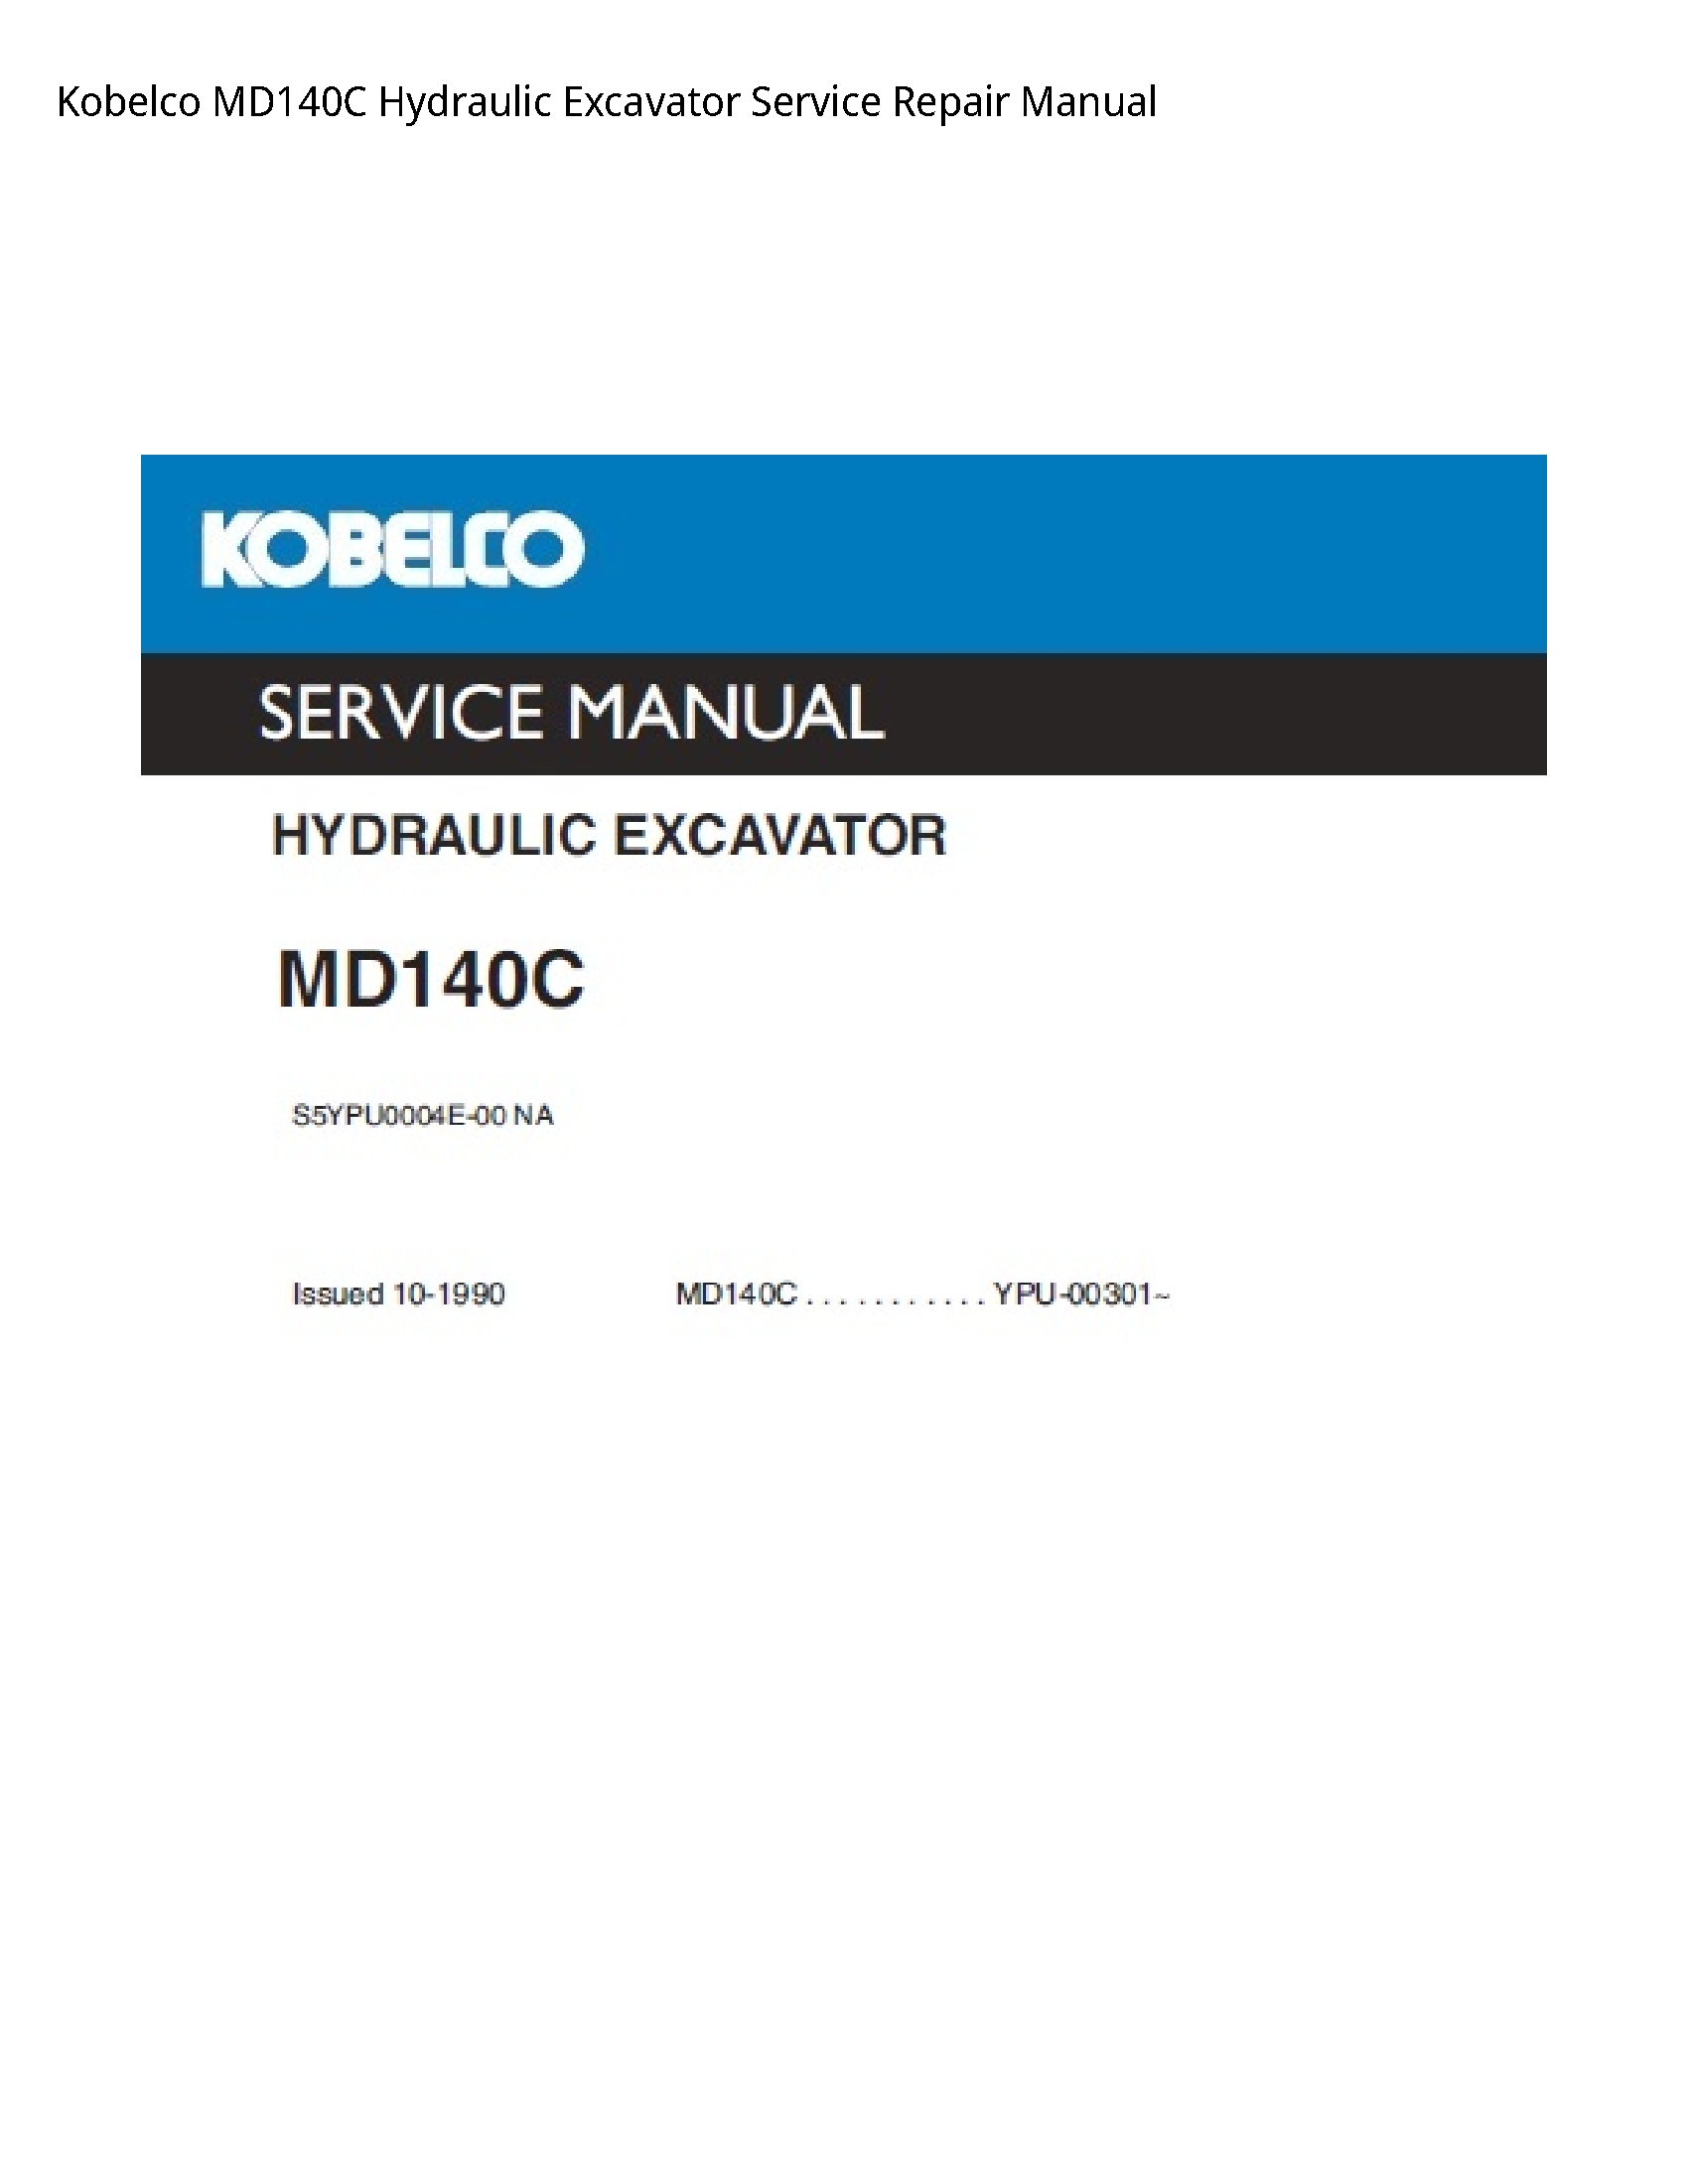 Kobelco MD140C Hydraulic Excavator manual